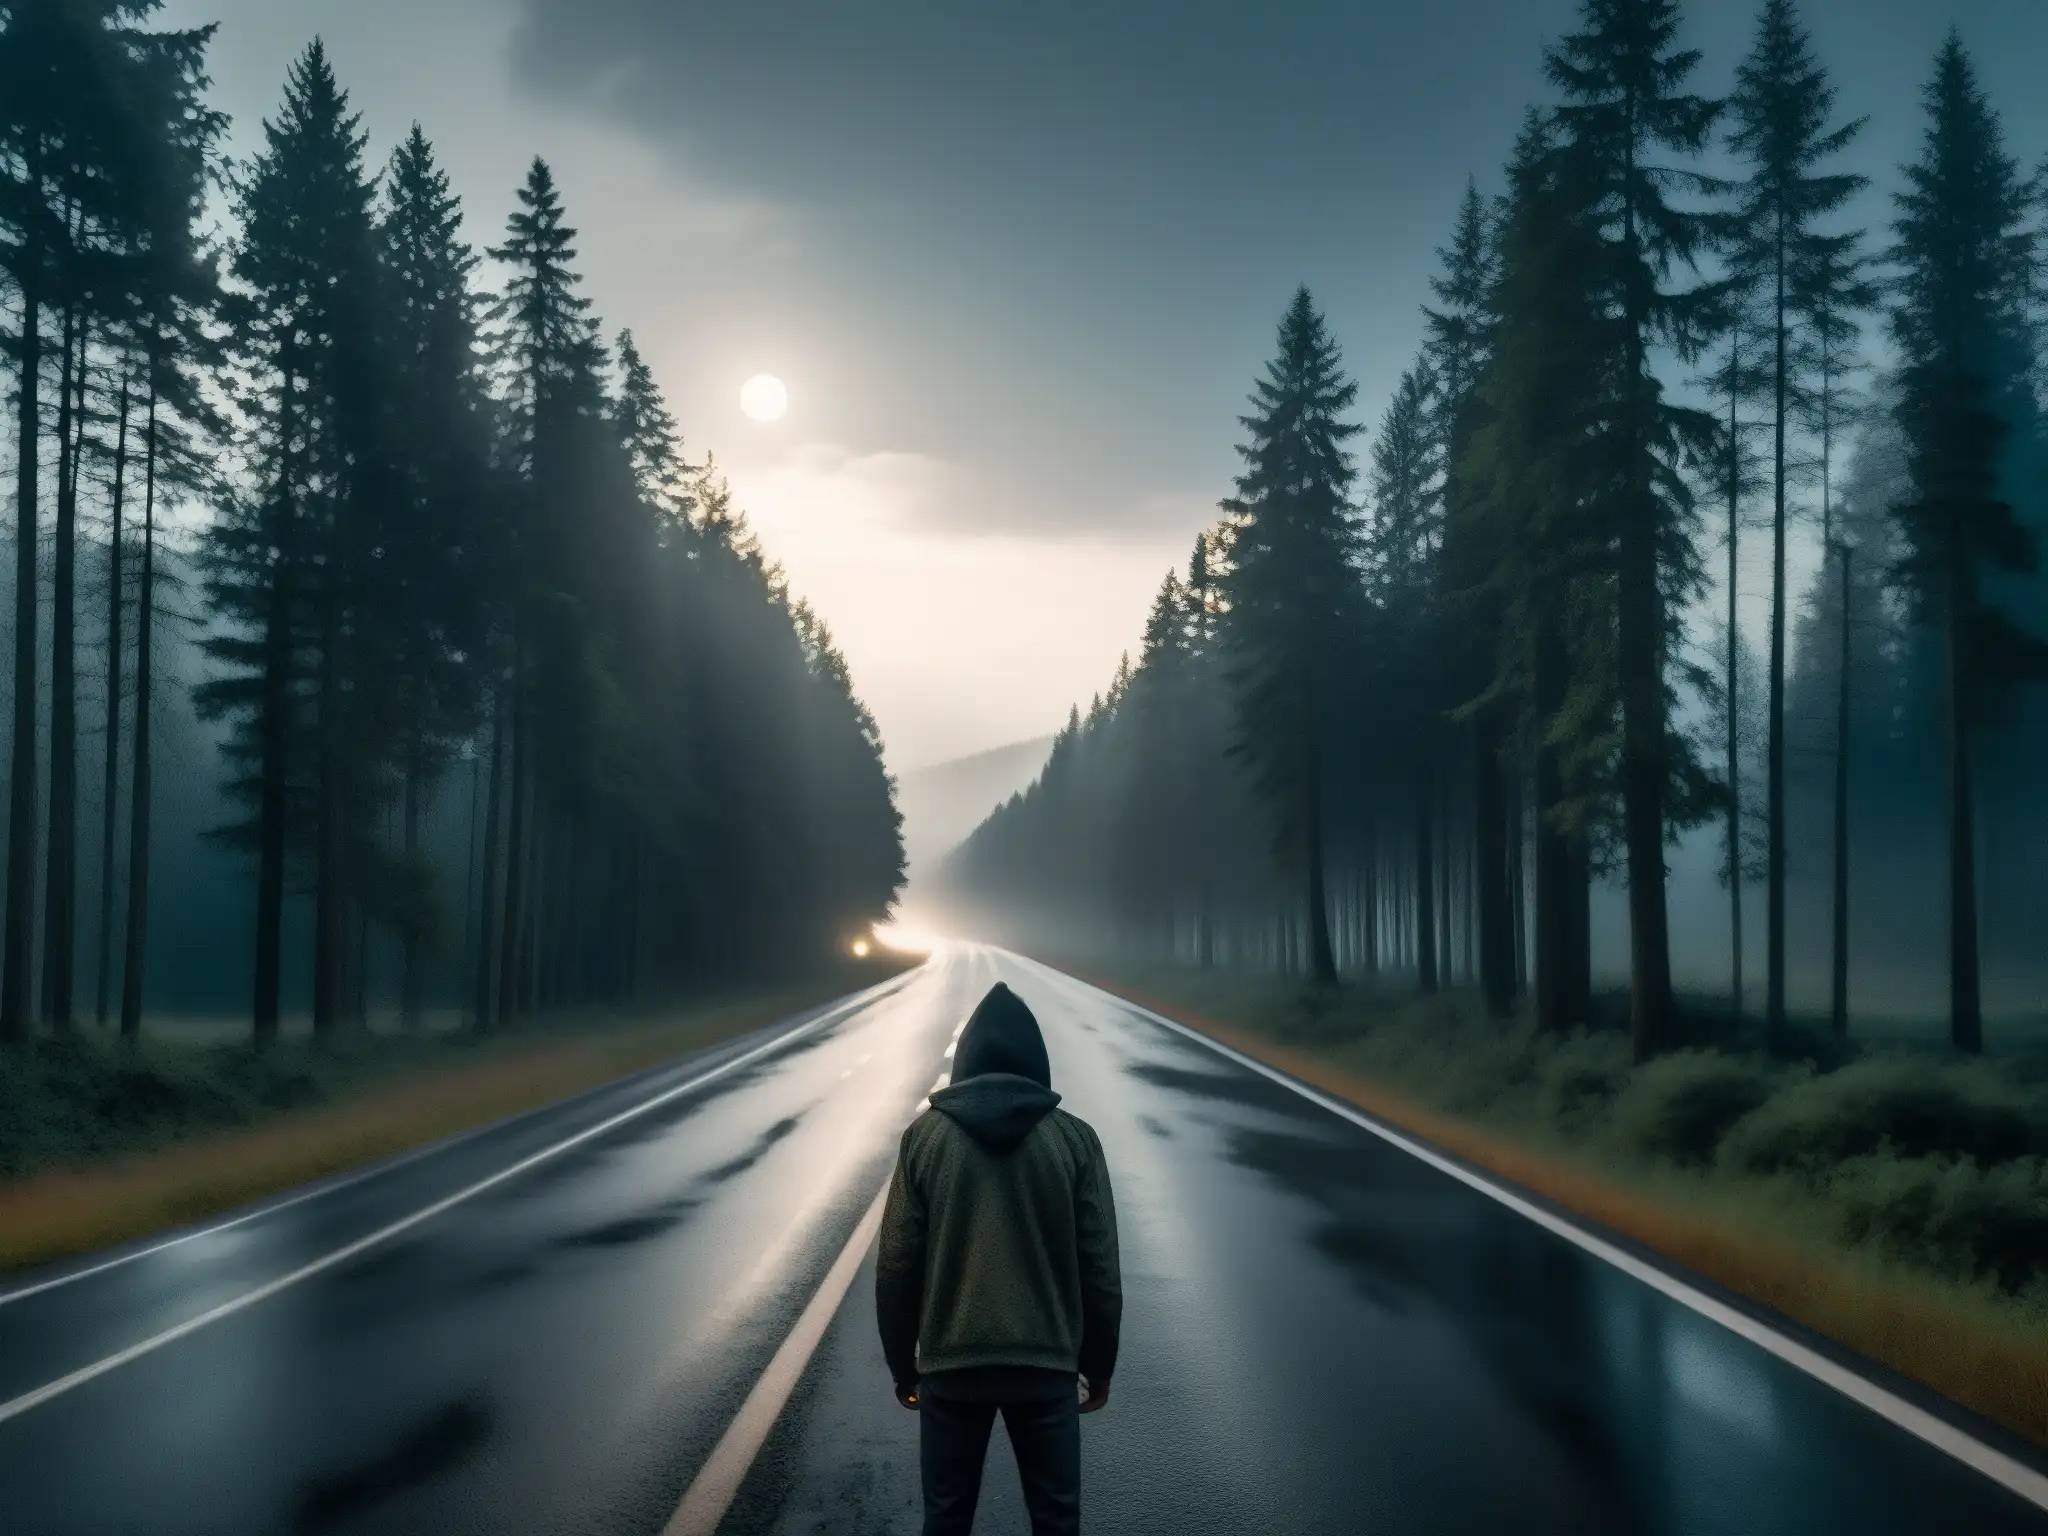 Autostopista fantasma en la carretera oscura, rodeada de bosques misteriosos